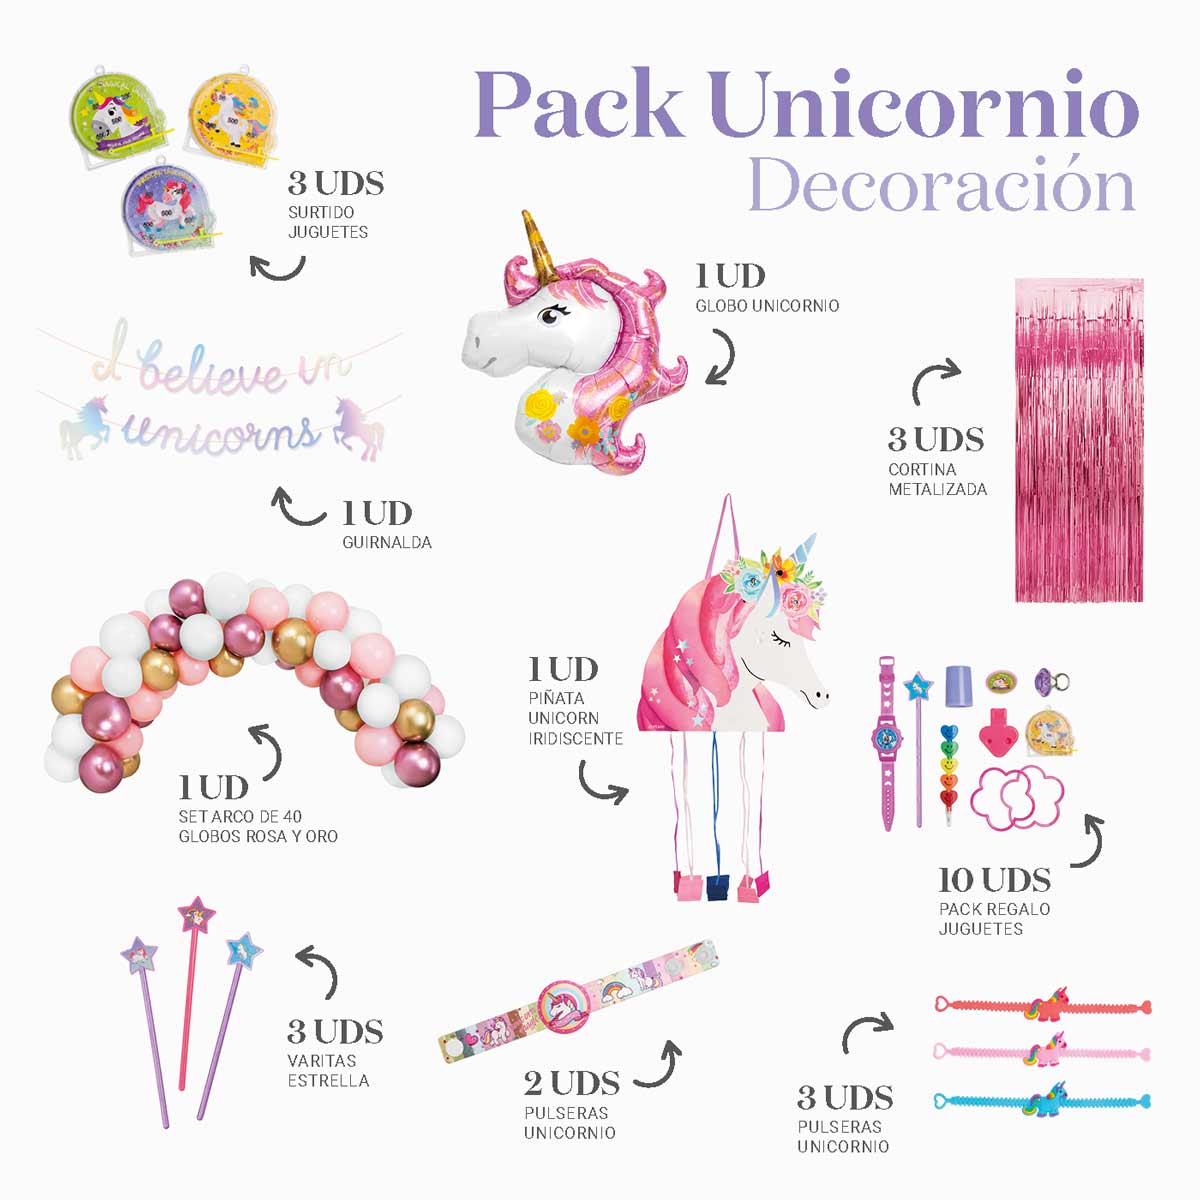 Unicorn Environment Decoration Kit